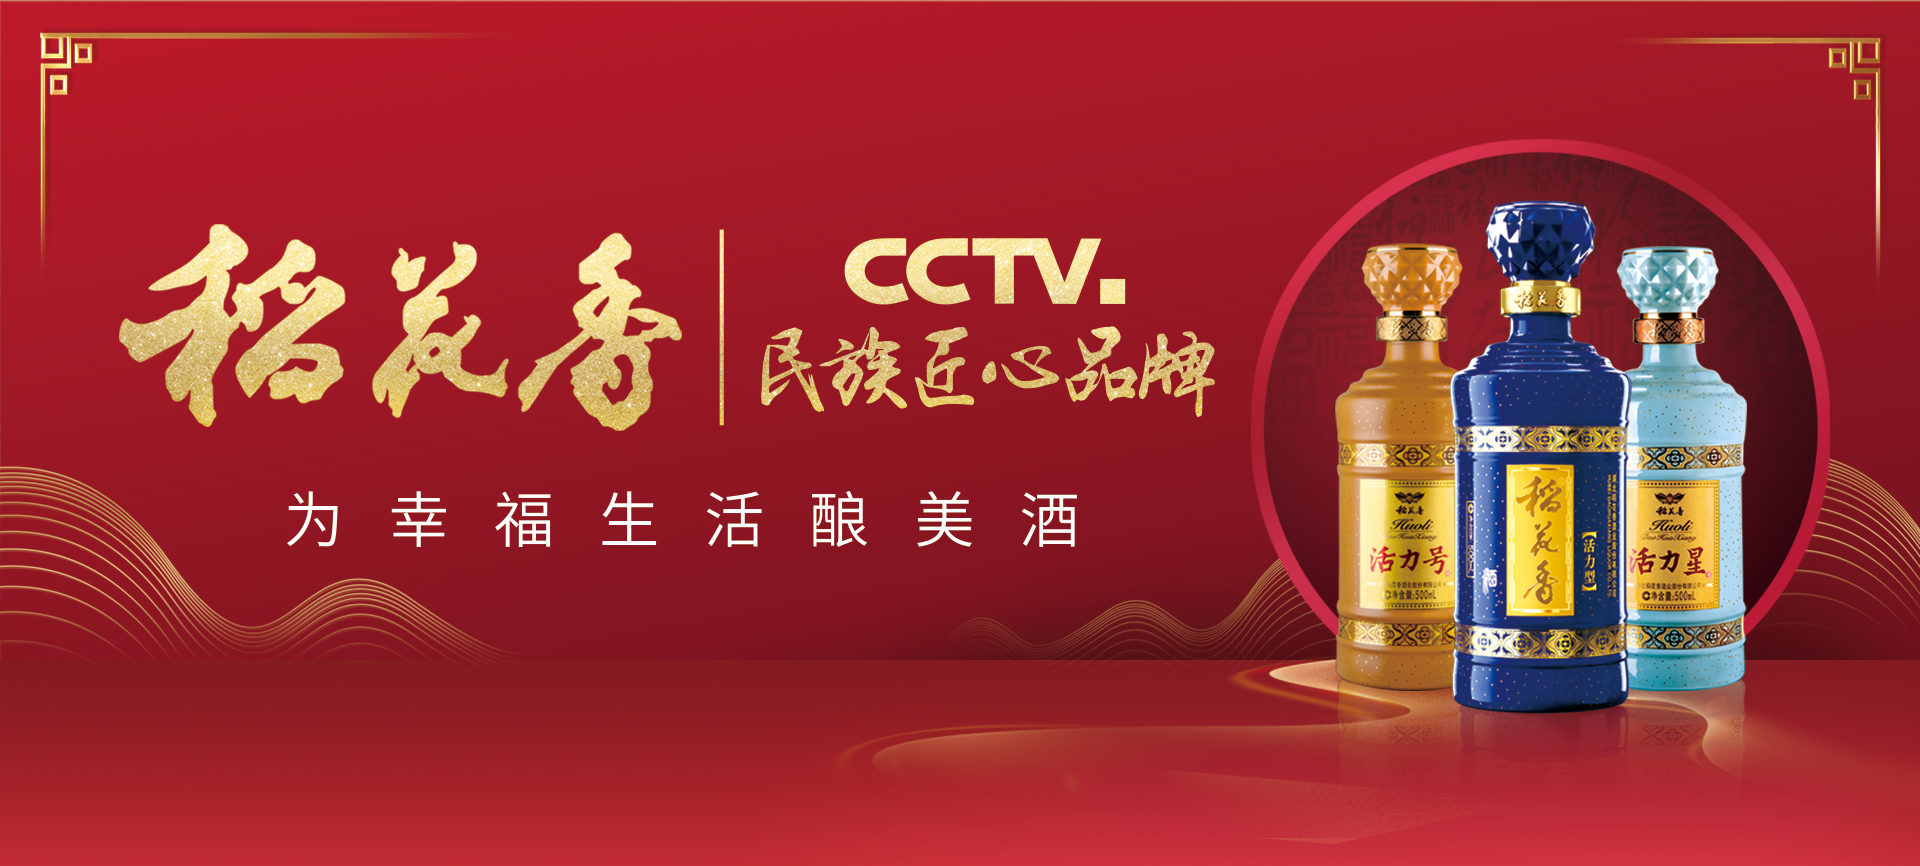 Z6尊龙凯时CCTV民族匠心